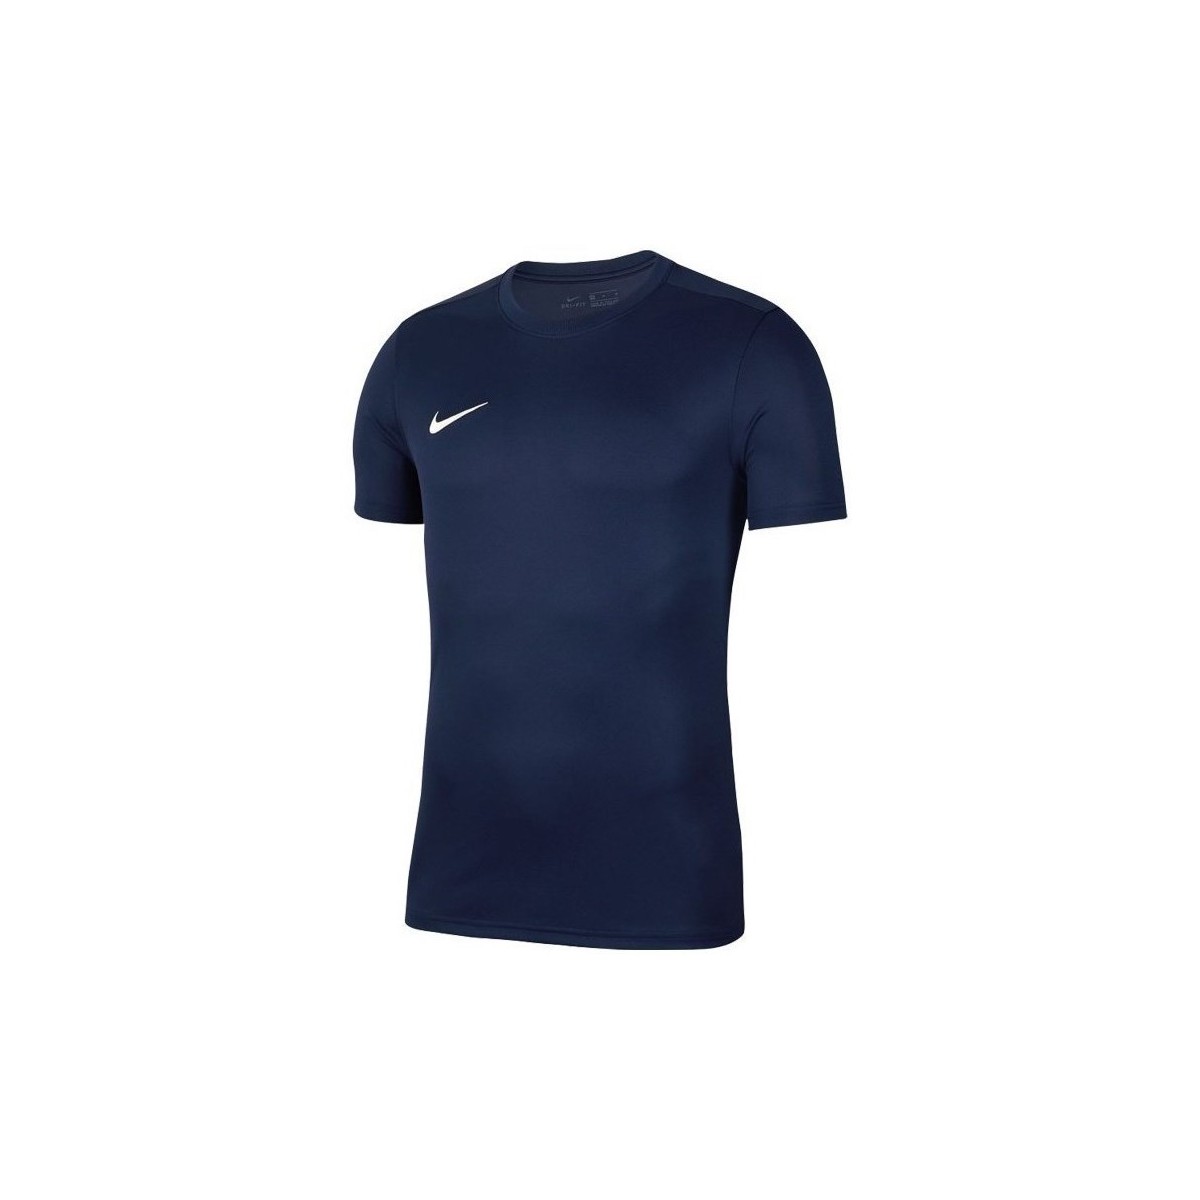 Textil Chlapecké Trička s krátkým rukávem Nike JR Dry Park Vii Tmavě modrá